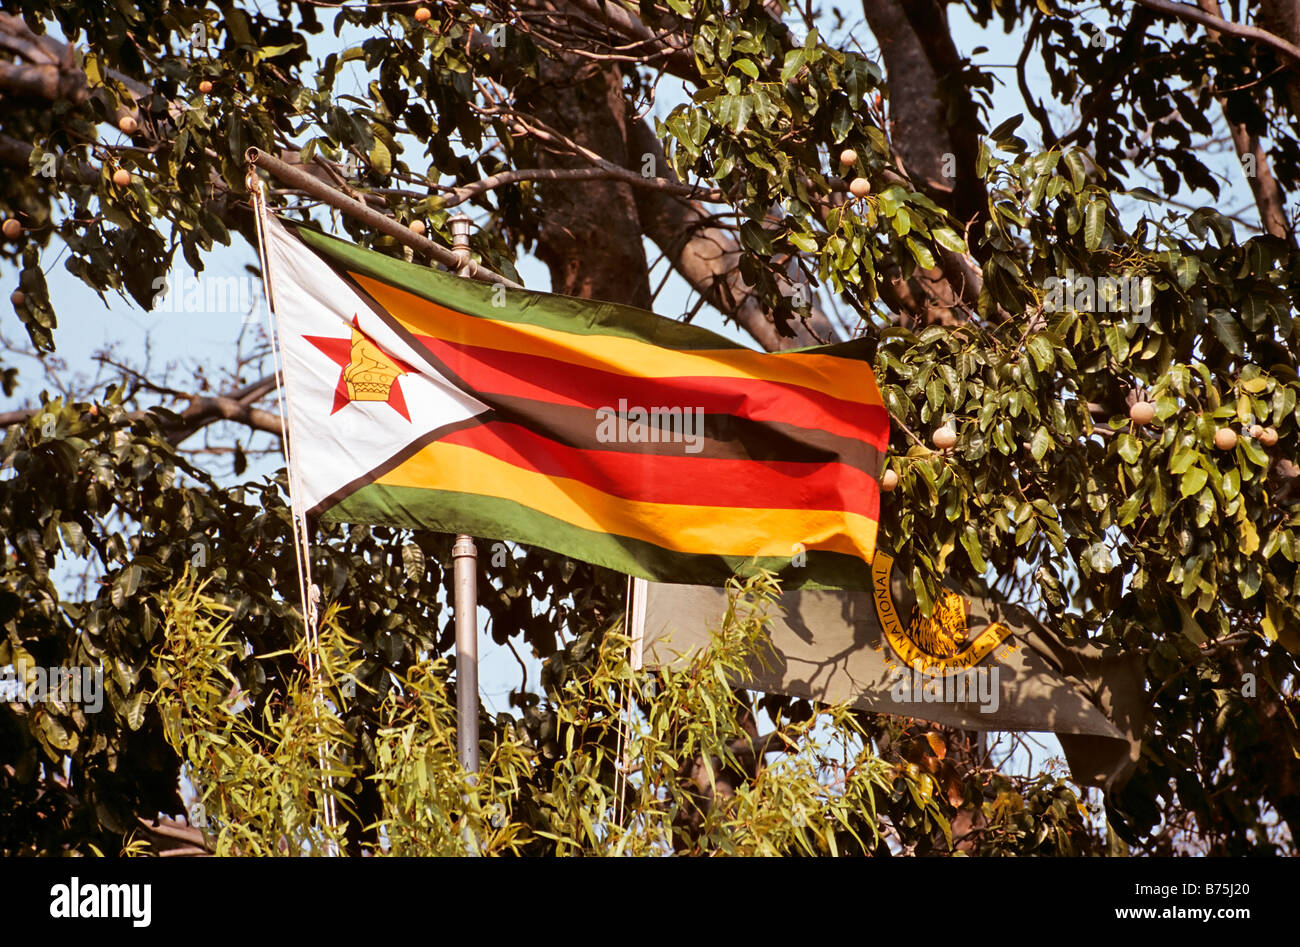 Flagg national Afrique Zimbabwe soufflant Banque D'Images